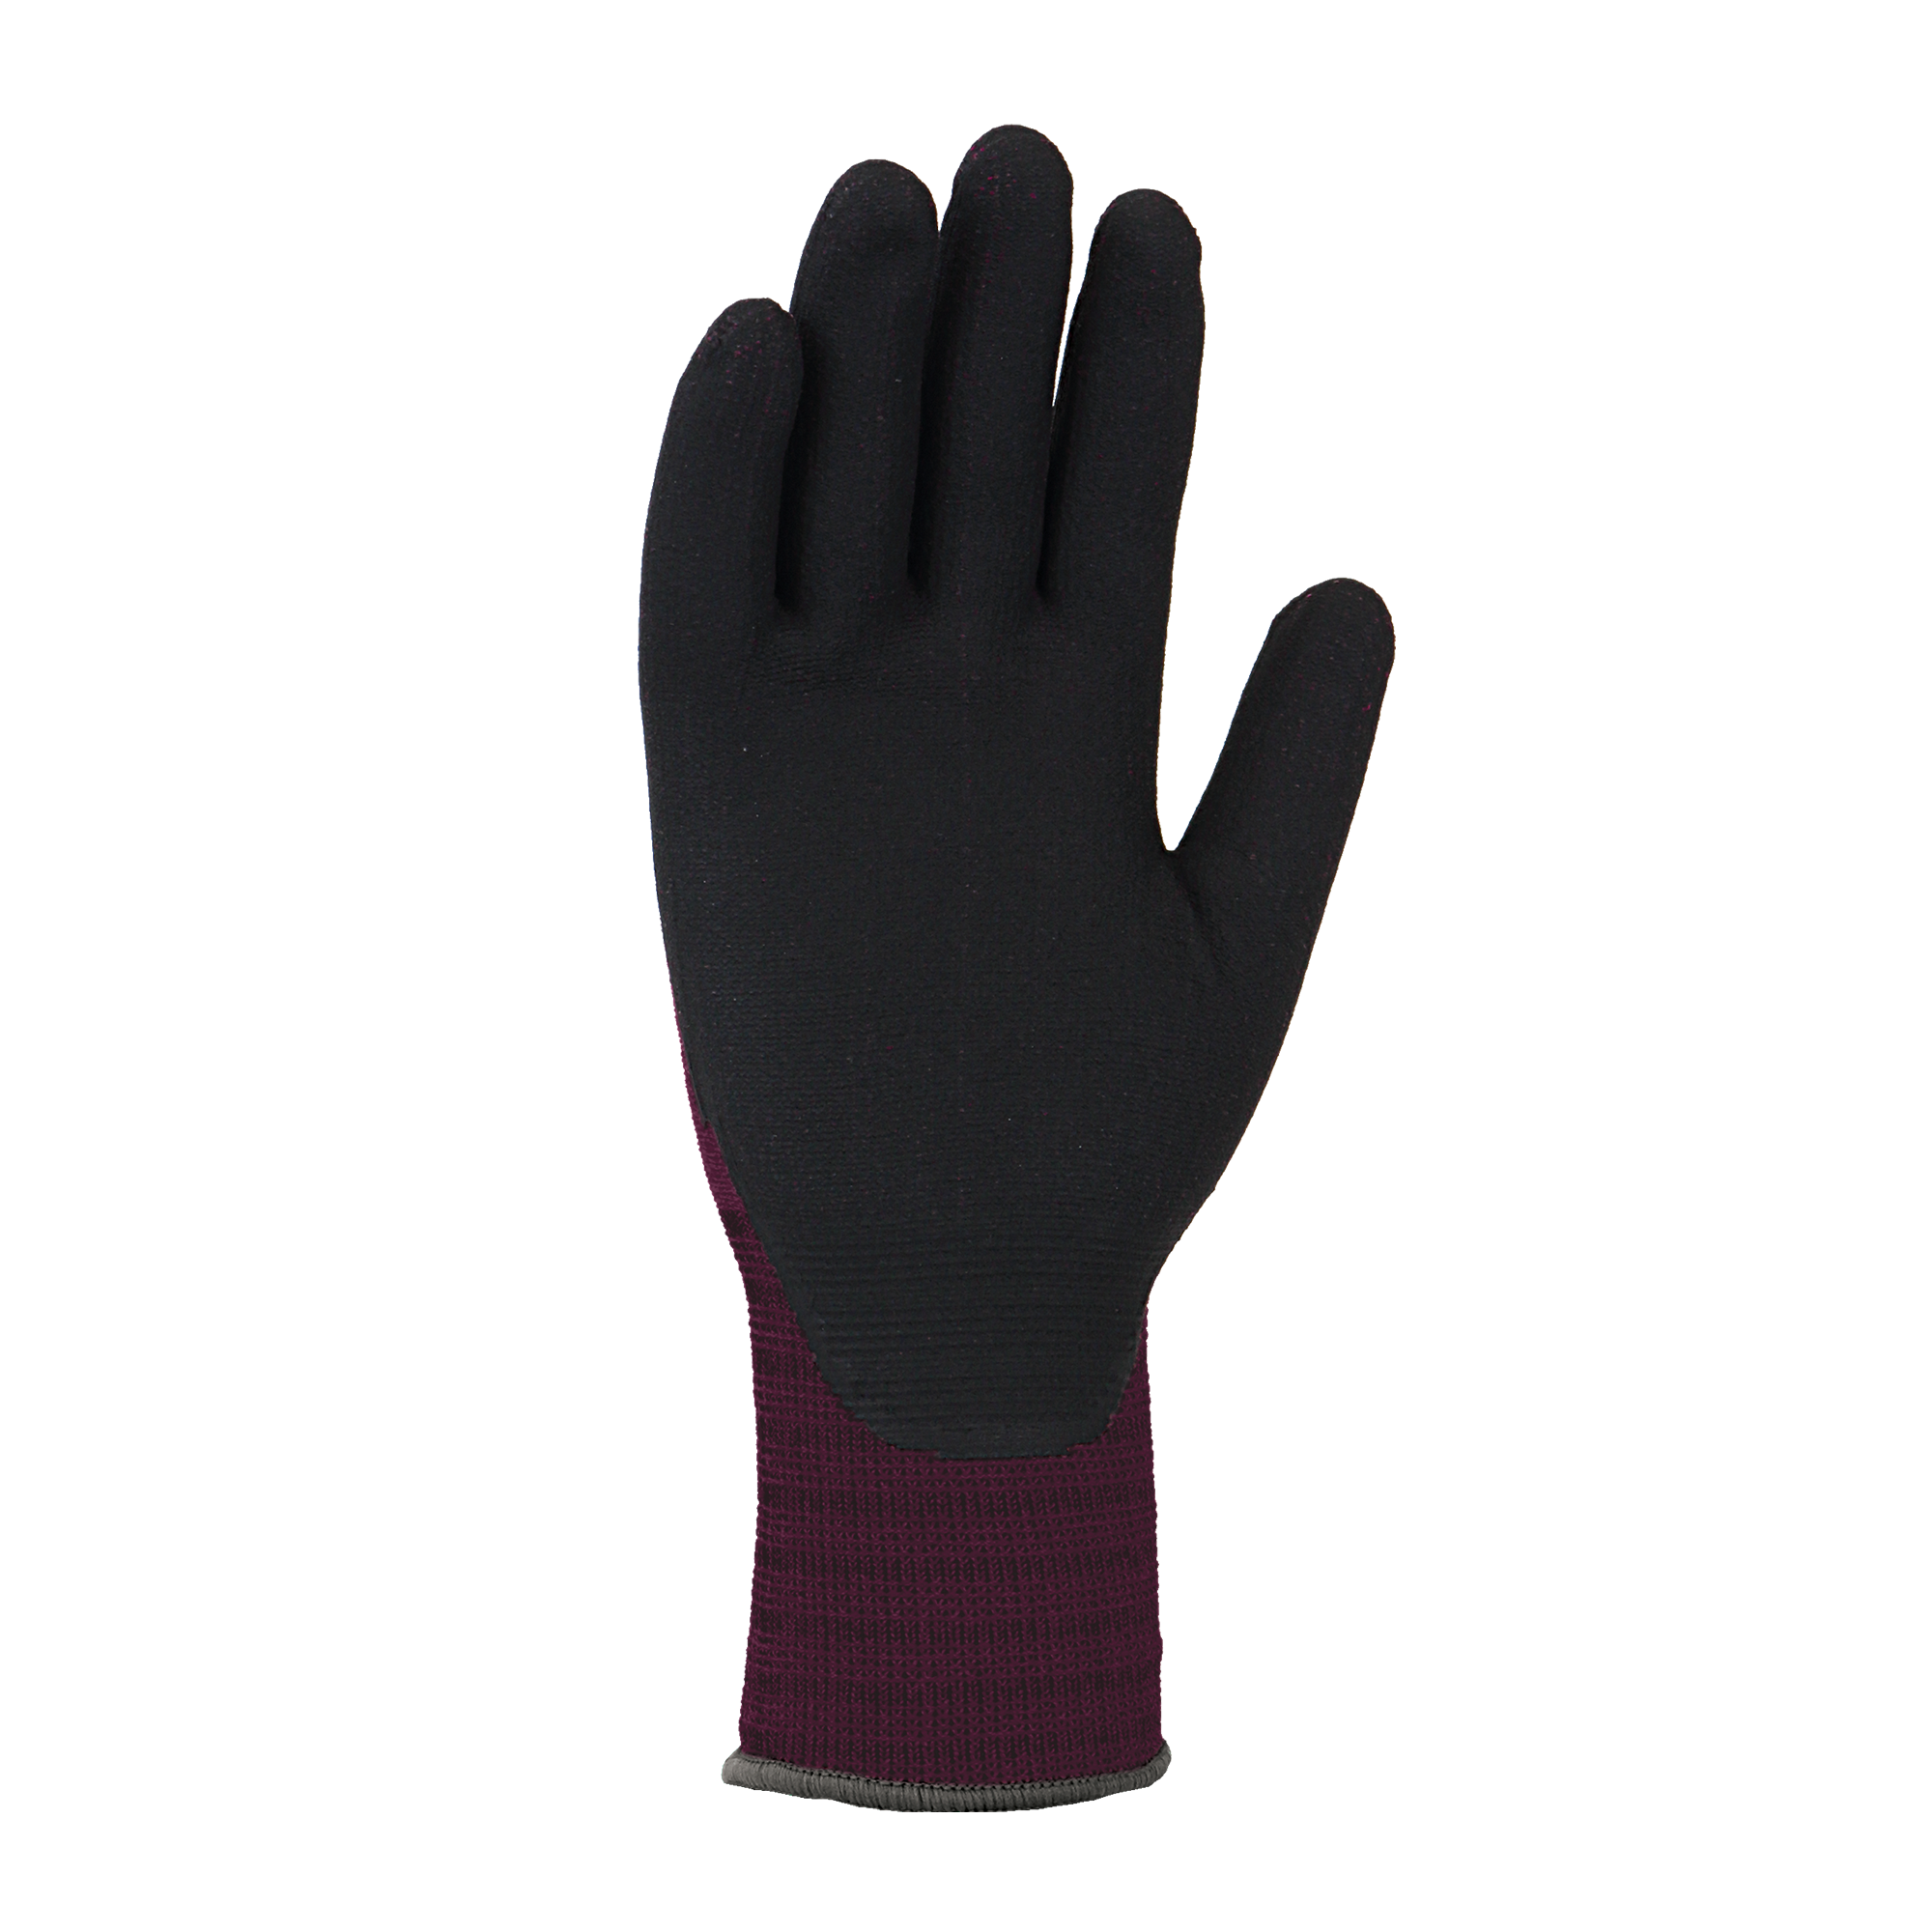 Picture of Carhartt WA661 Mens Nitrile Glove